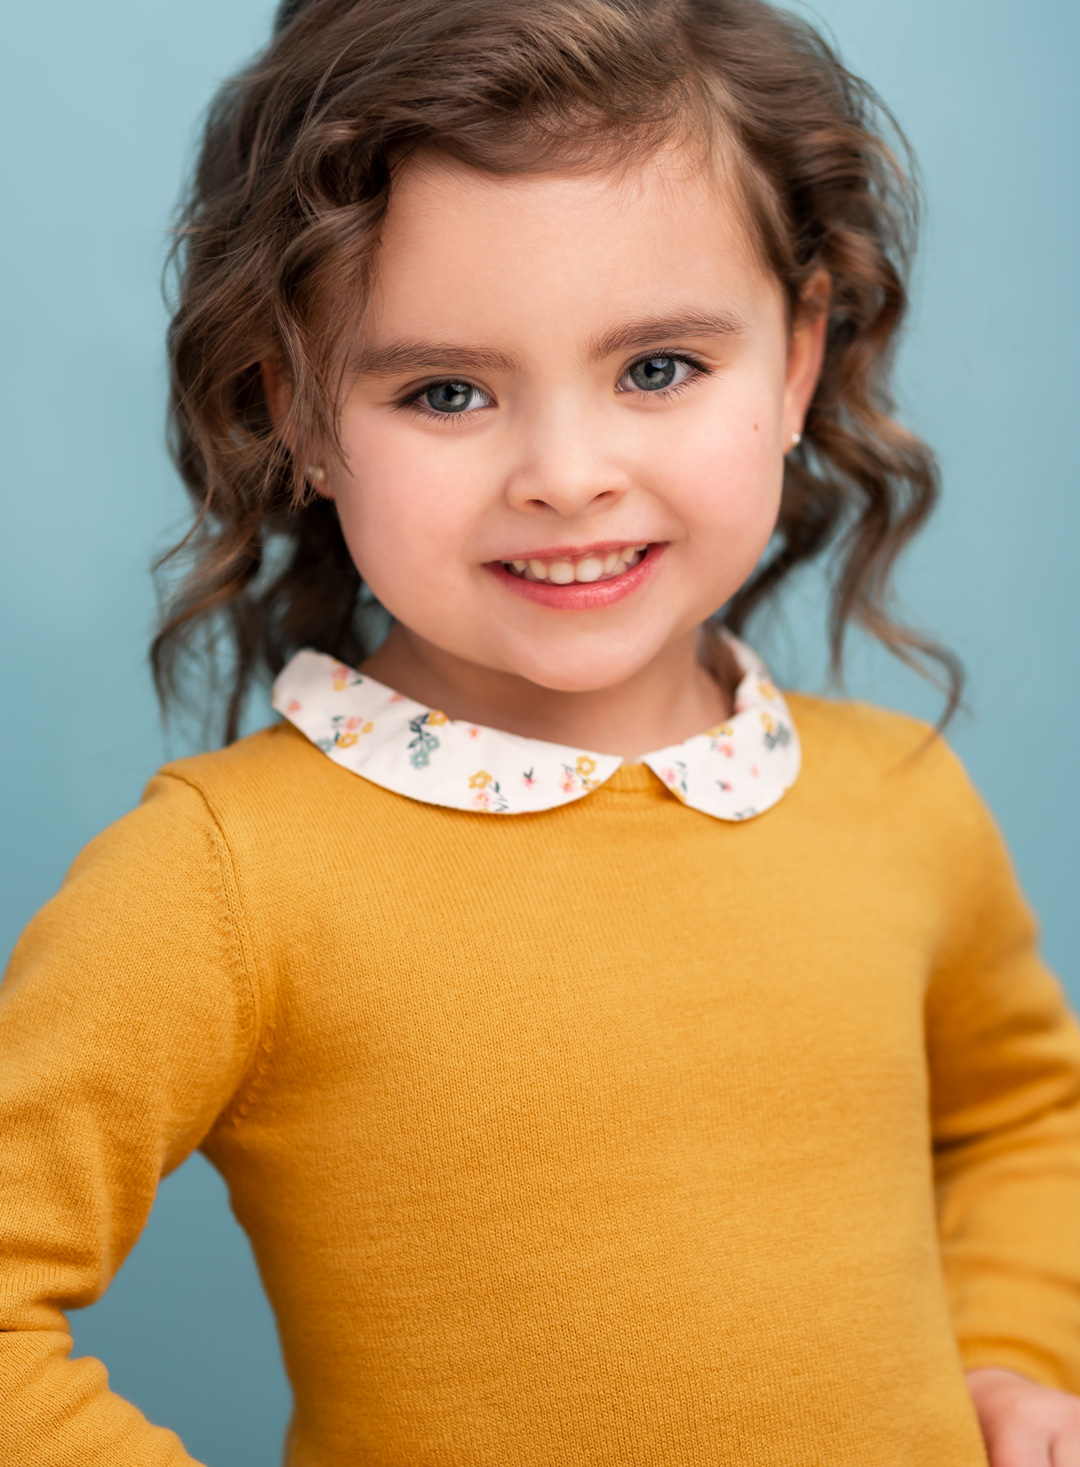 Hallmark child actor Mila Jones smiling